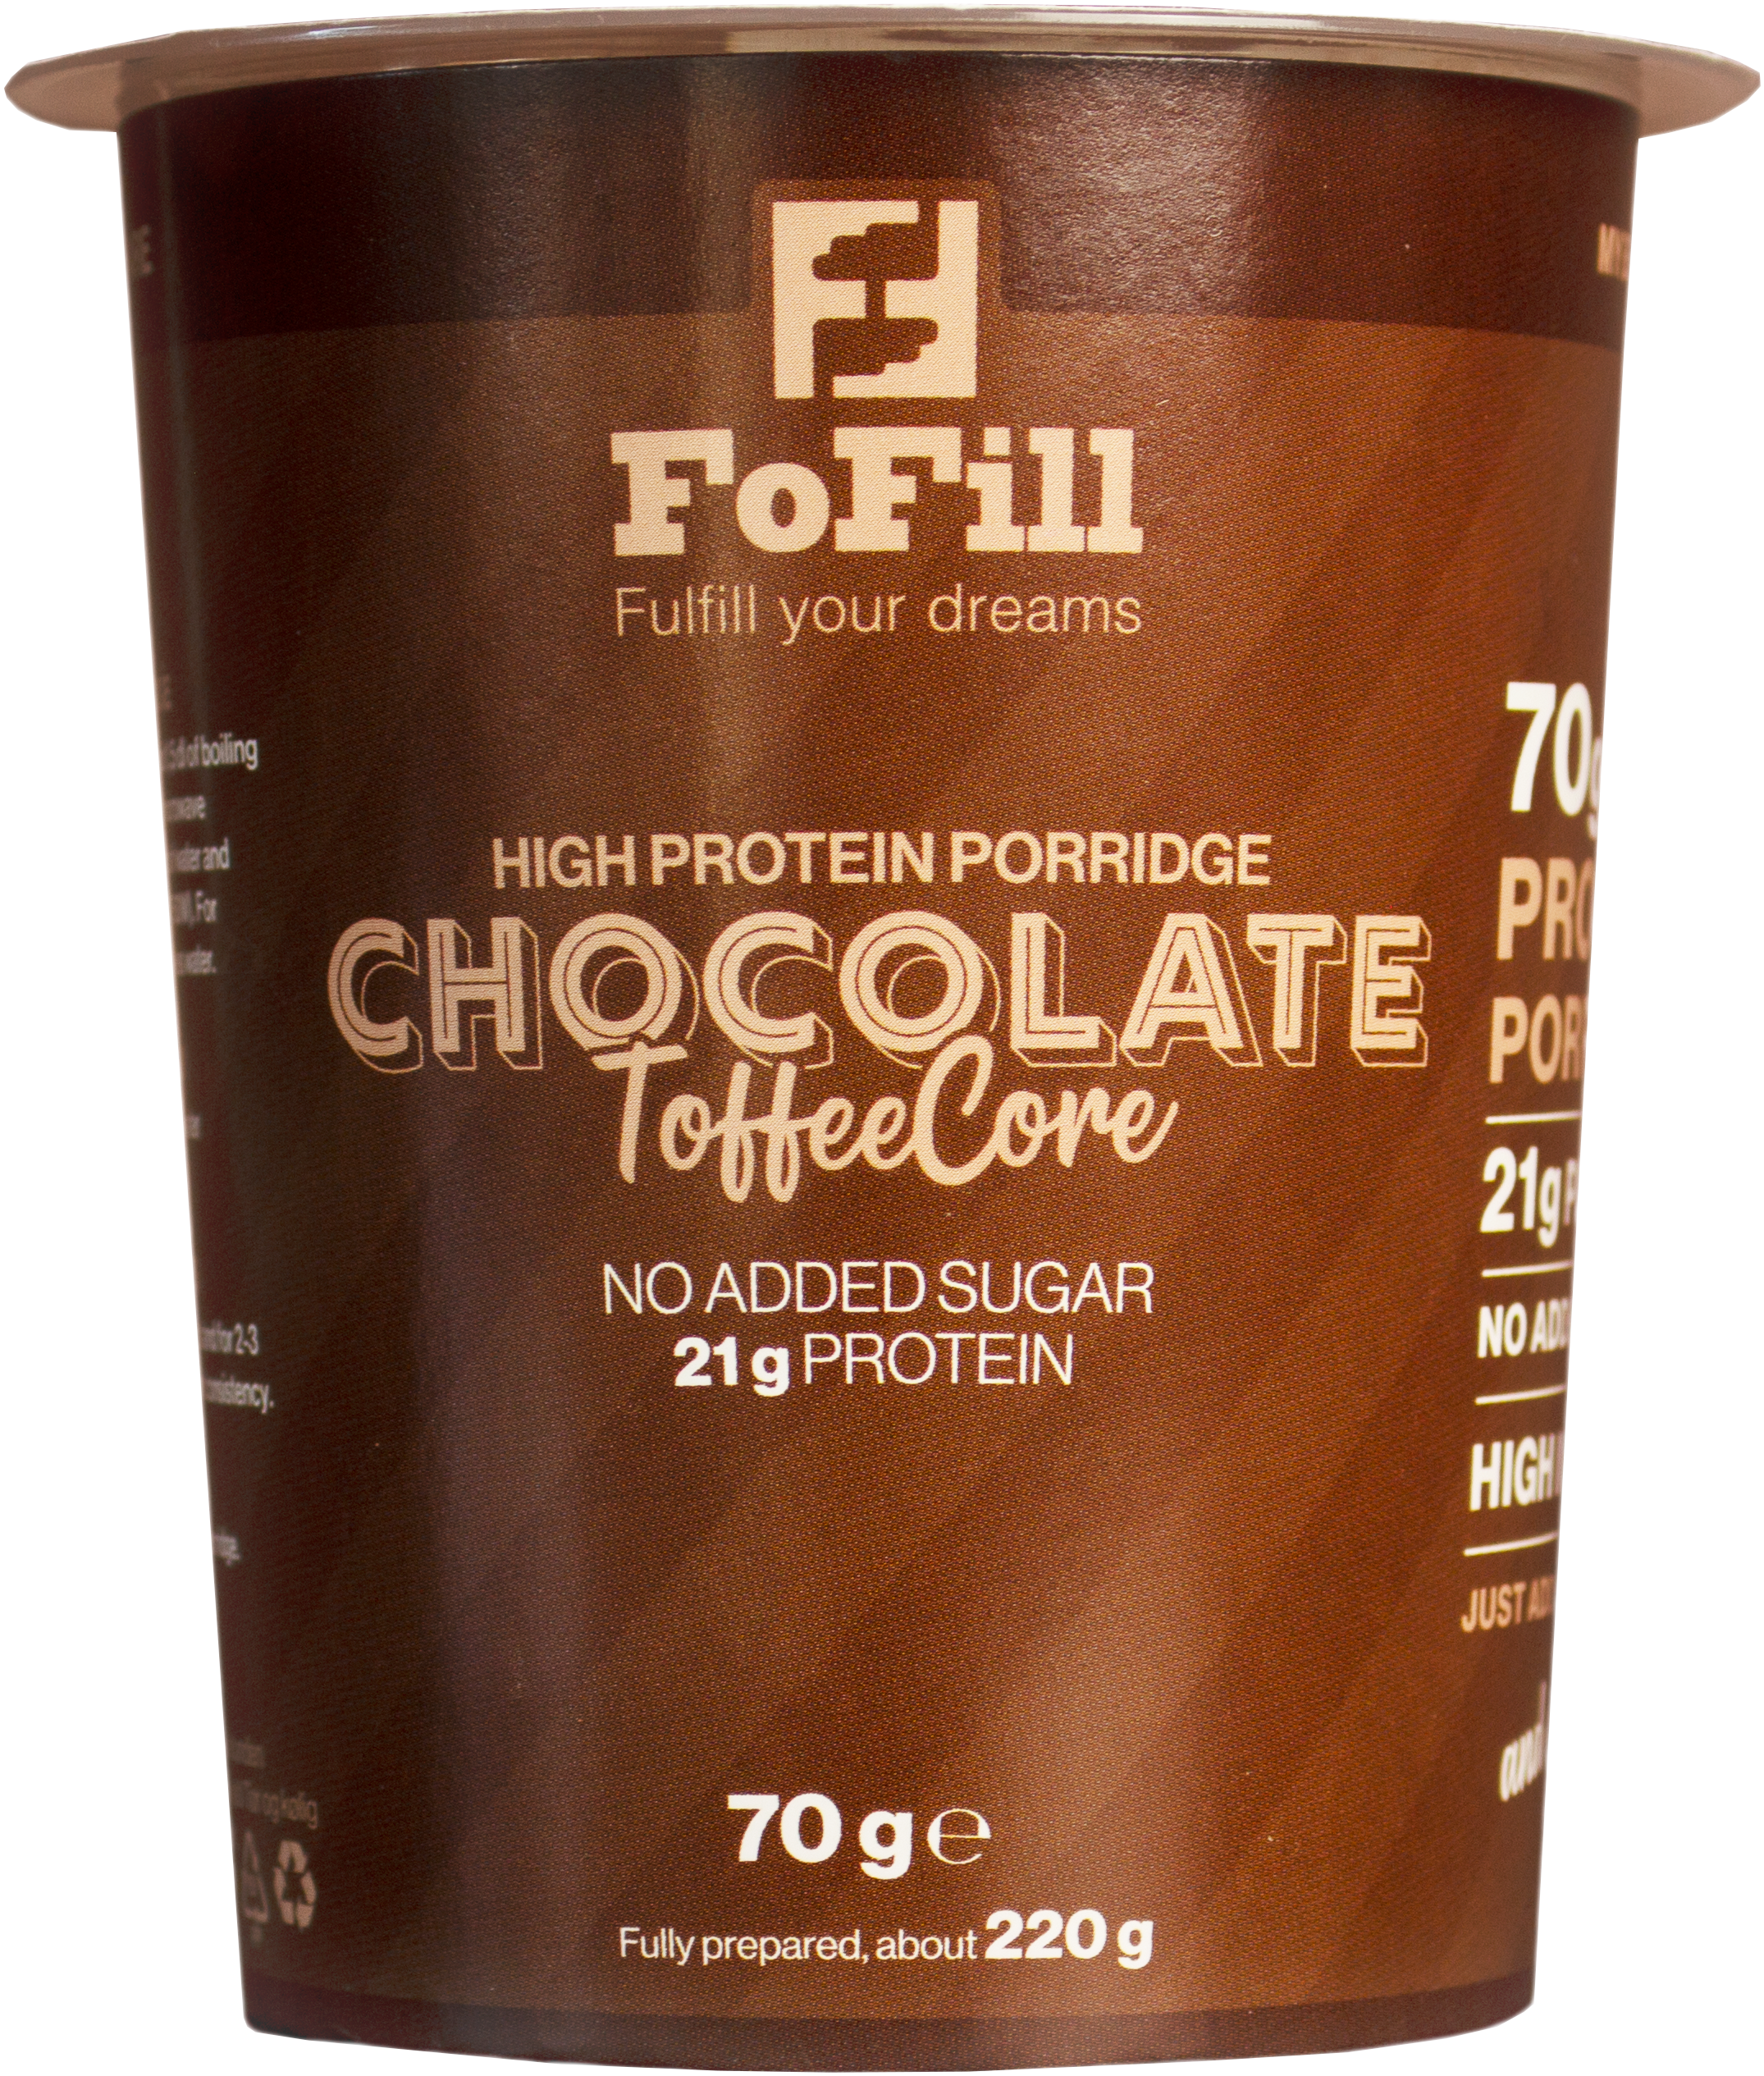 FoFill Chocolate ToffeeCore Proteingröt 70g